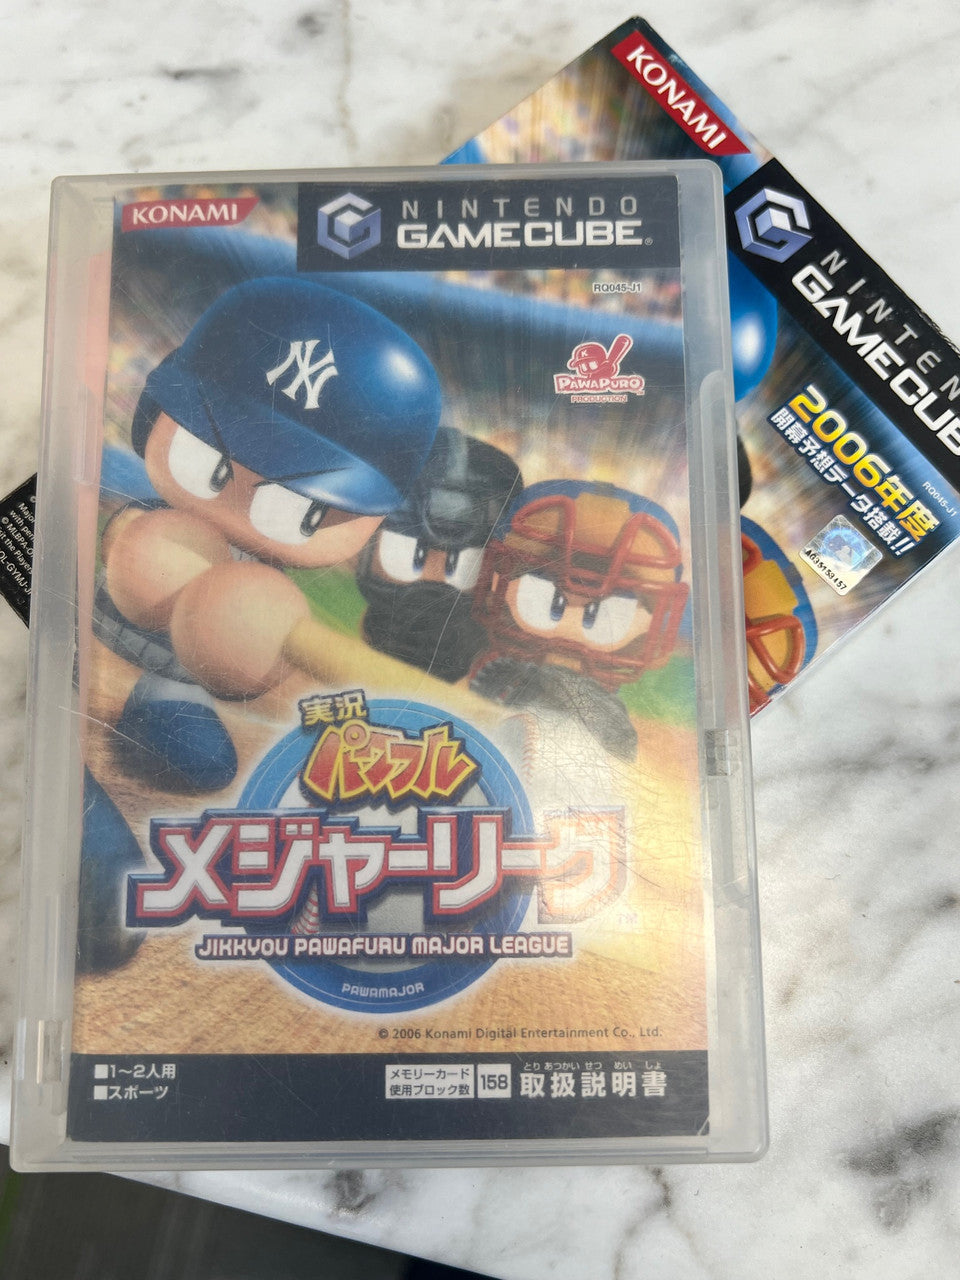 Gamecube Jikkyou Pawafuru Major League Powerful Import JP